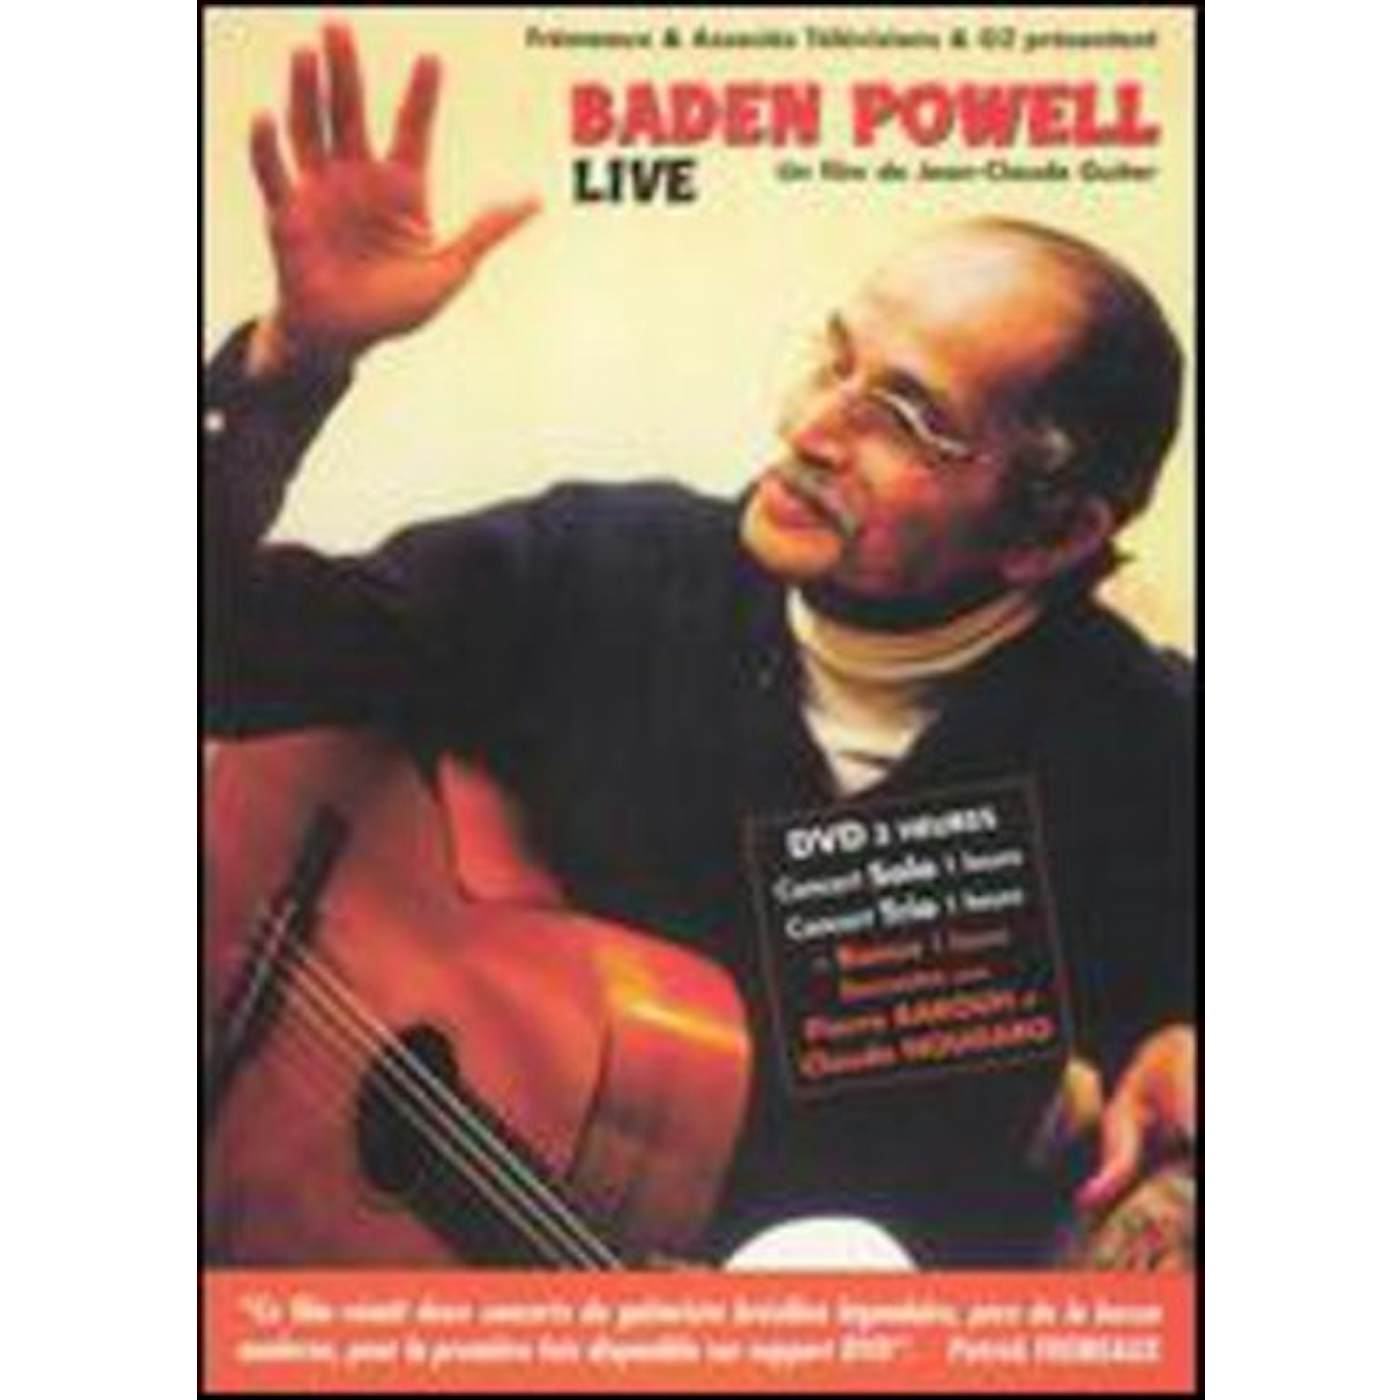 BADEN POWELL LIVE DVD